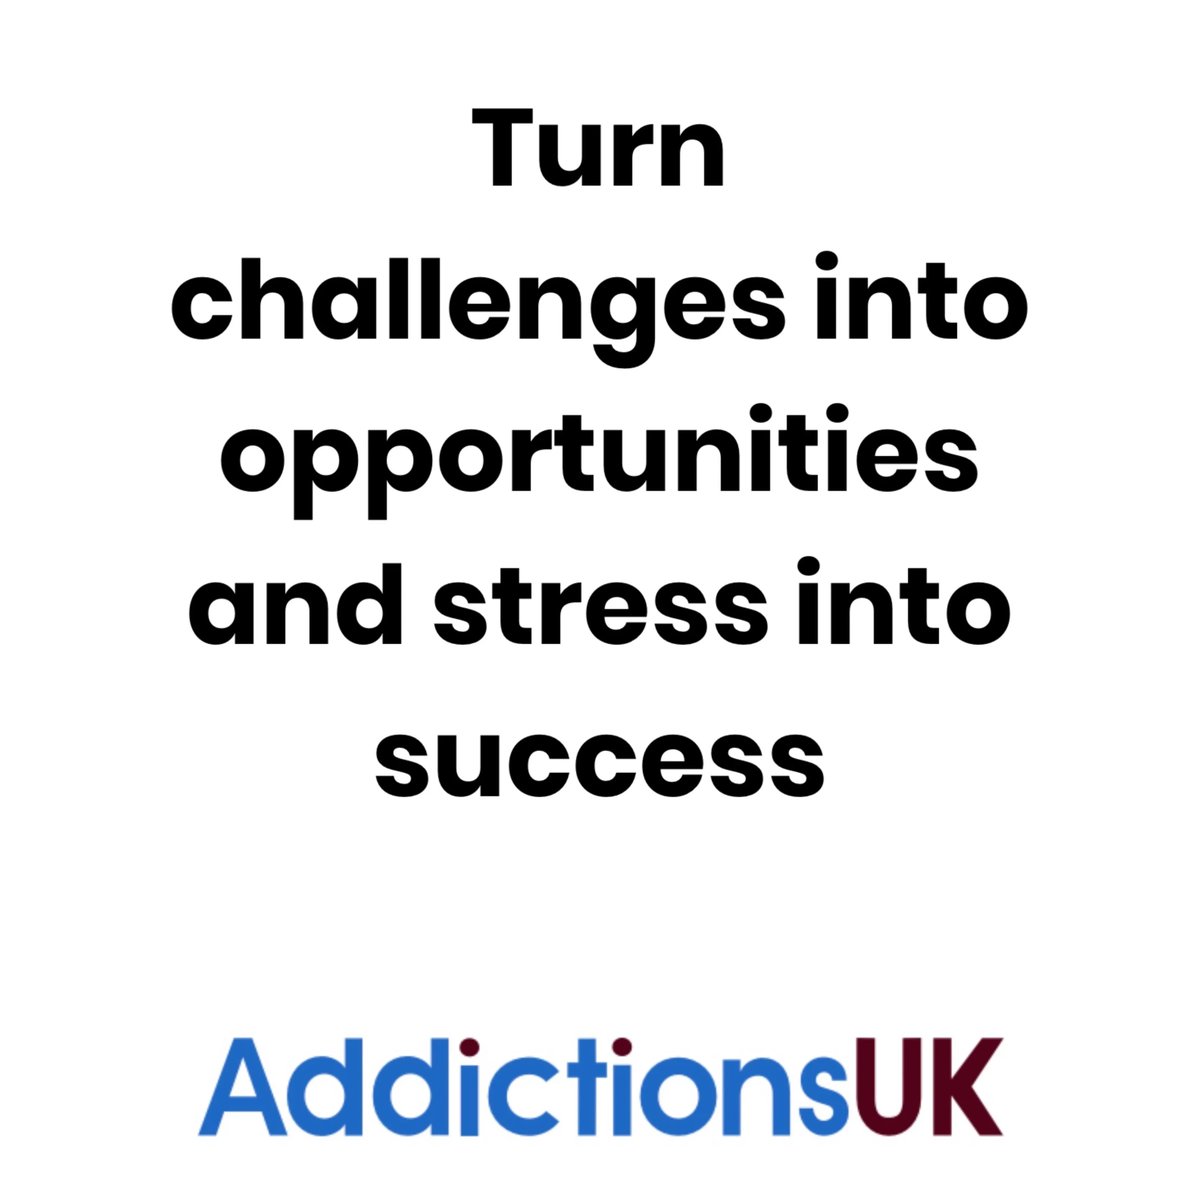 #stressawarnessmonth! 💙

#addictionsuk #recoveryjourney #addiction #recover #addictions #addictionrecovery #recovery #addictionawareness #recoveryispossible